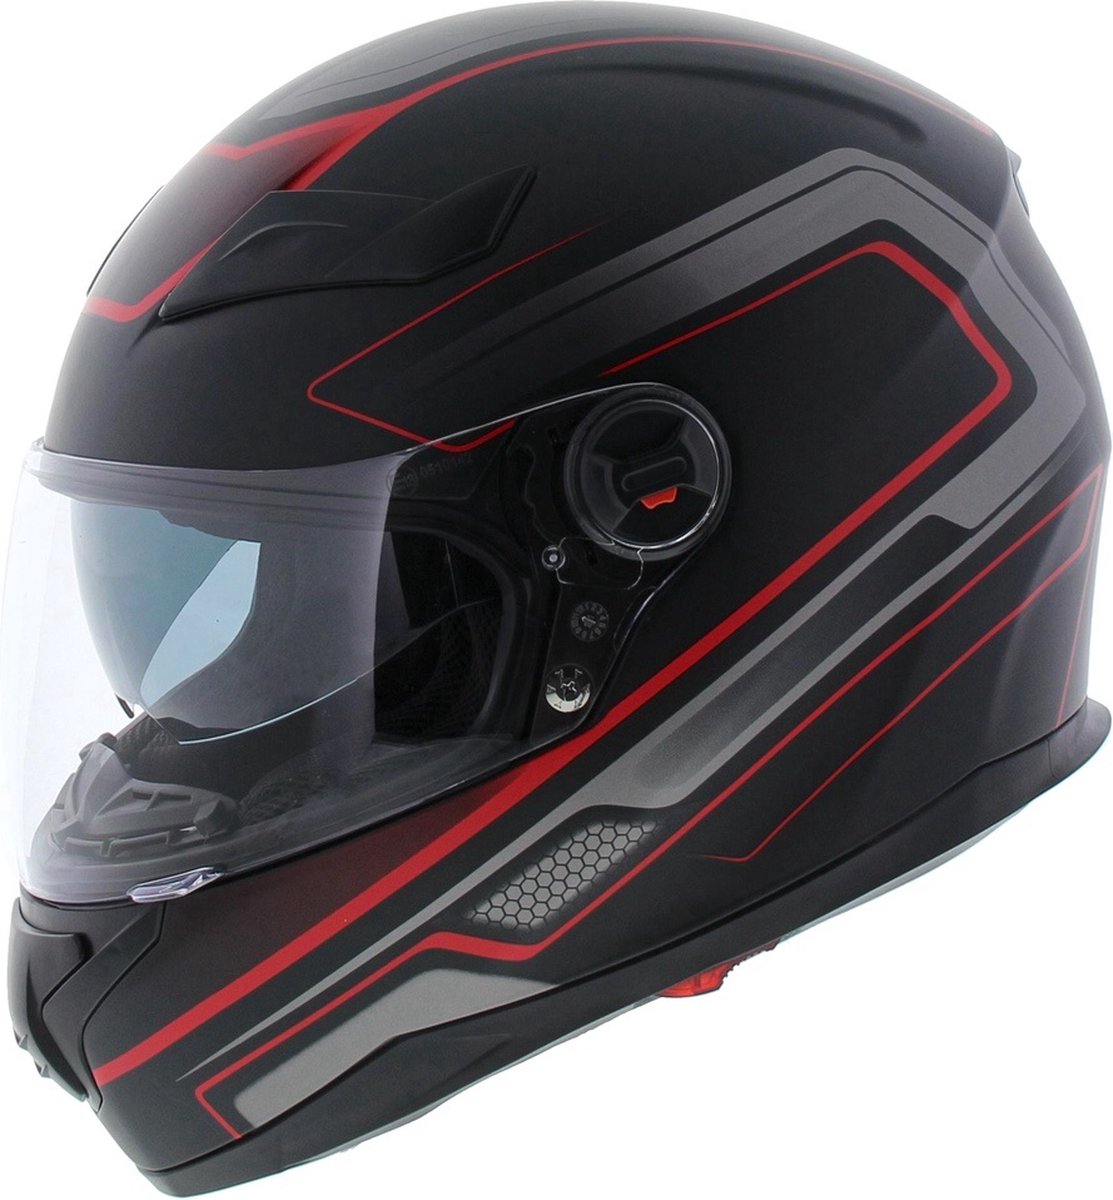 Motor / Scooter Helm - Vito Falcone - Integraalhelm - Mat zwart / rood - XXL